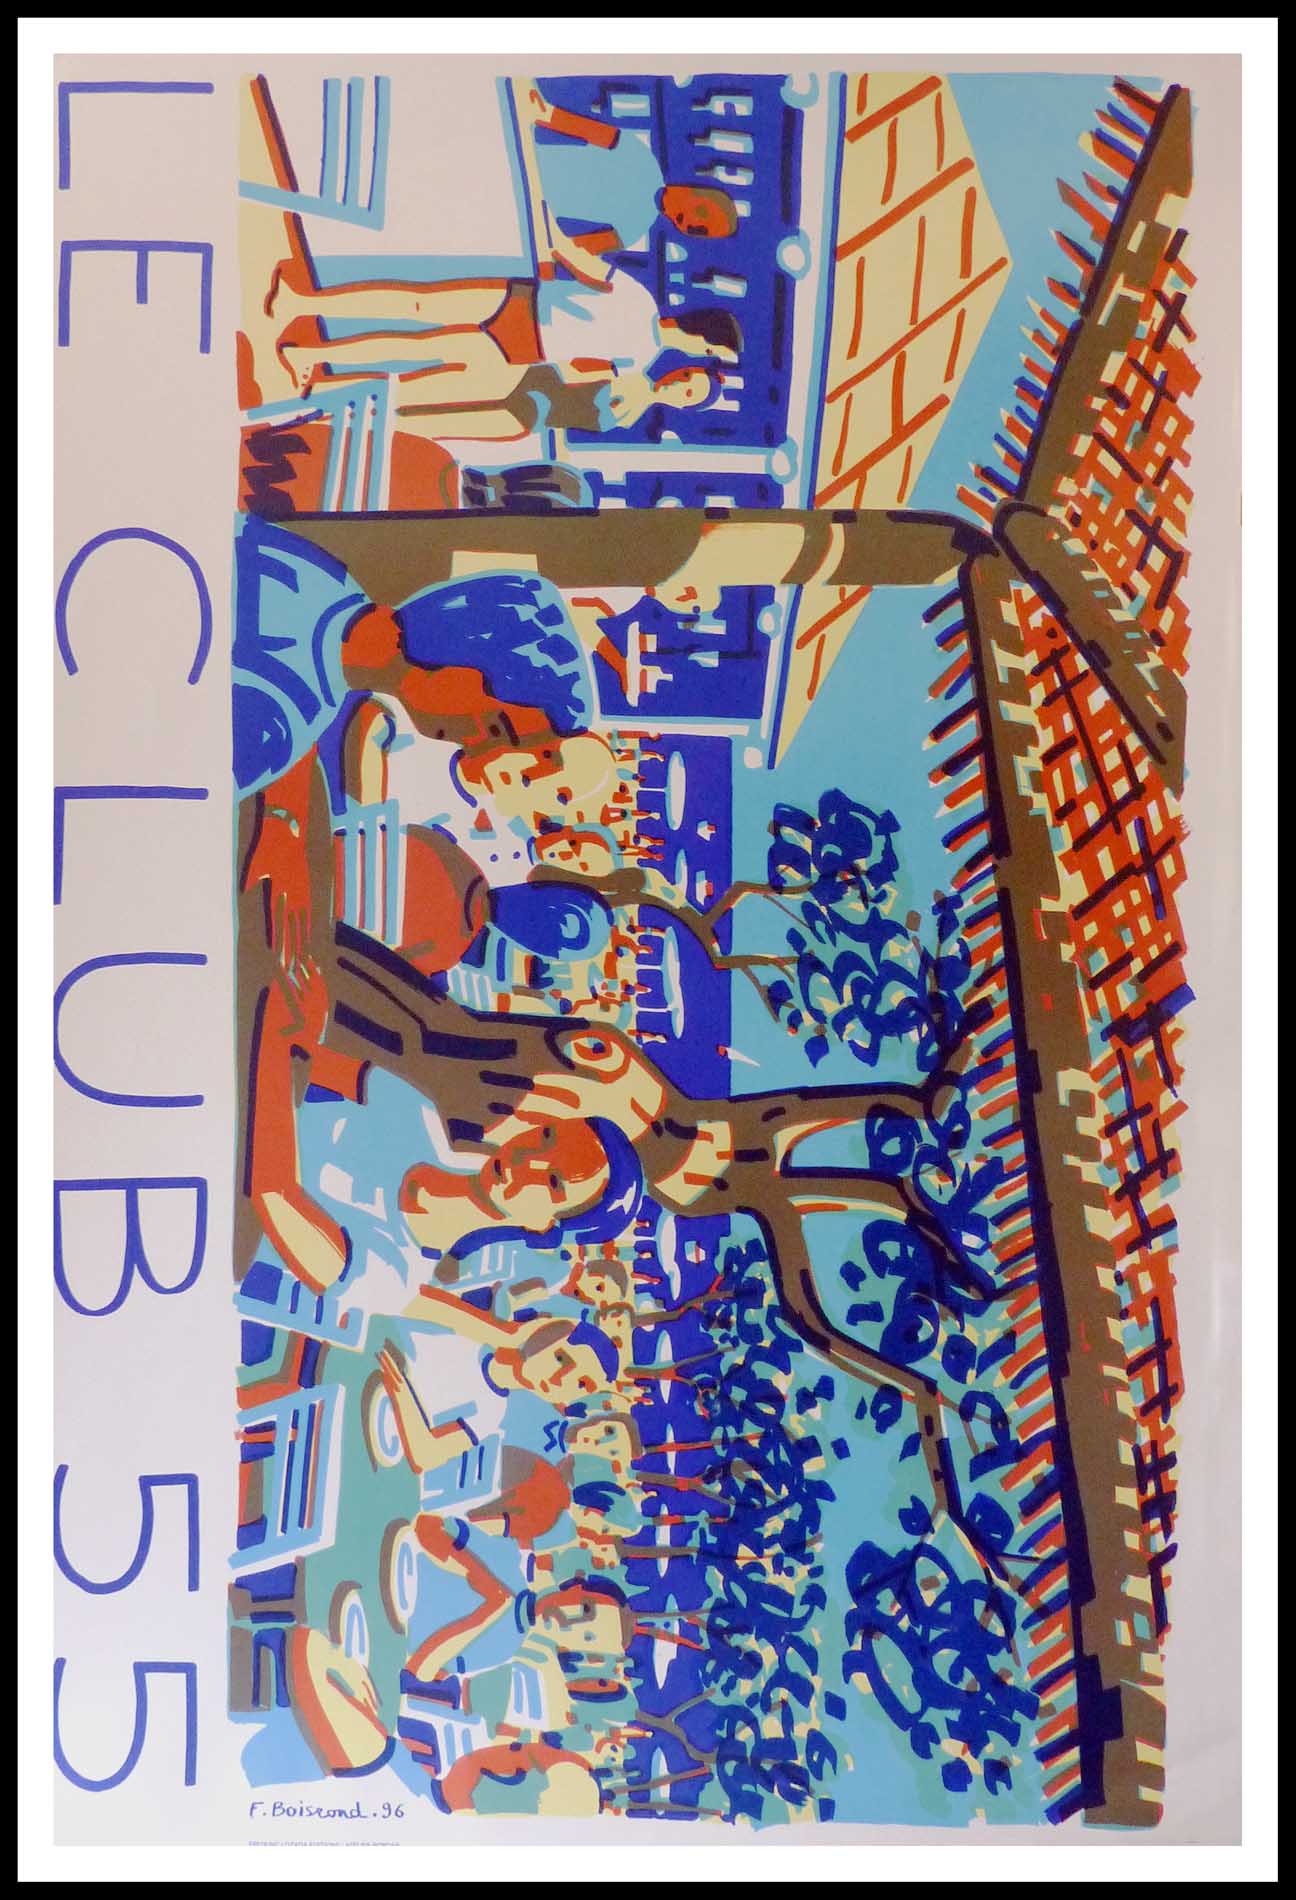 (alt="original vintage travel poster, Club 55, Saint Tropez, Ramatuelle, beachresort poster, signed in the plate F. BOISROND, printed by Atelier Bordas, 1996")